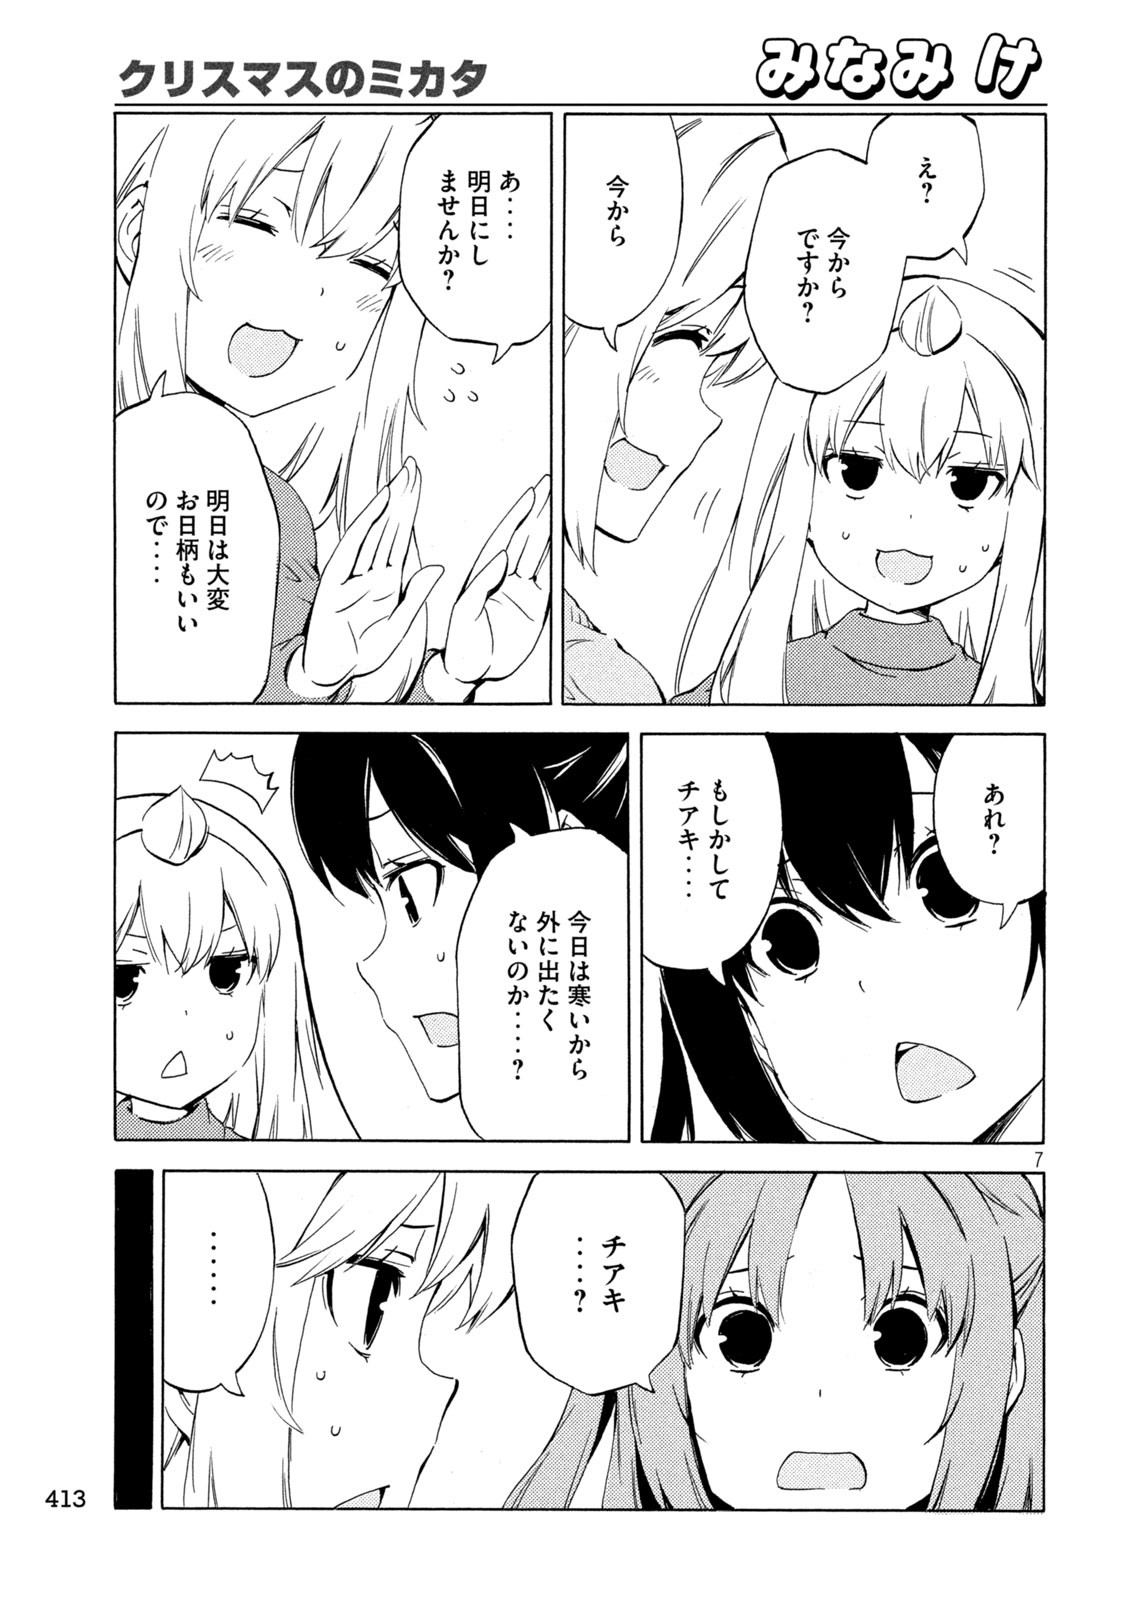 Minami-ke - Chapter 475 - Page 7